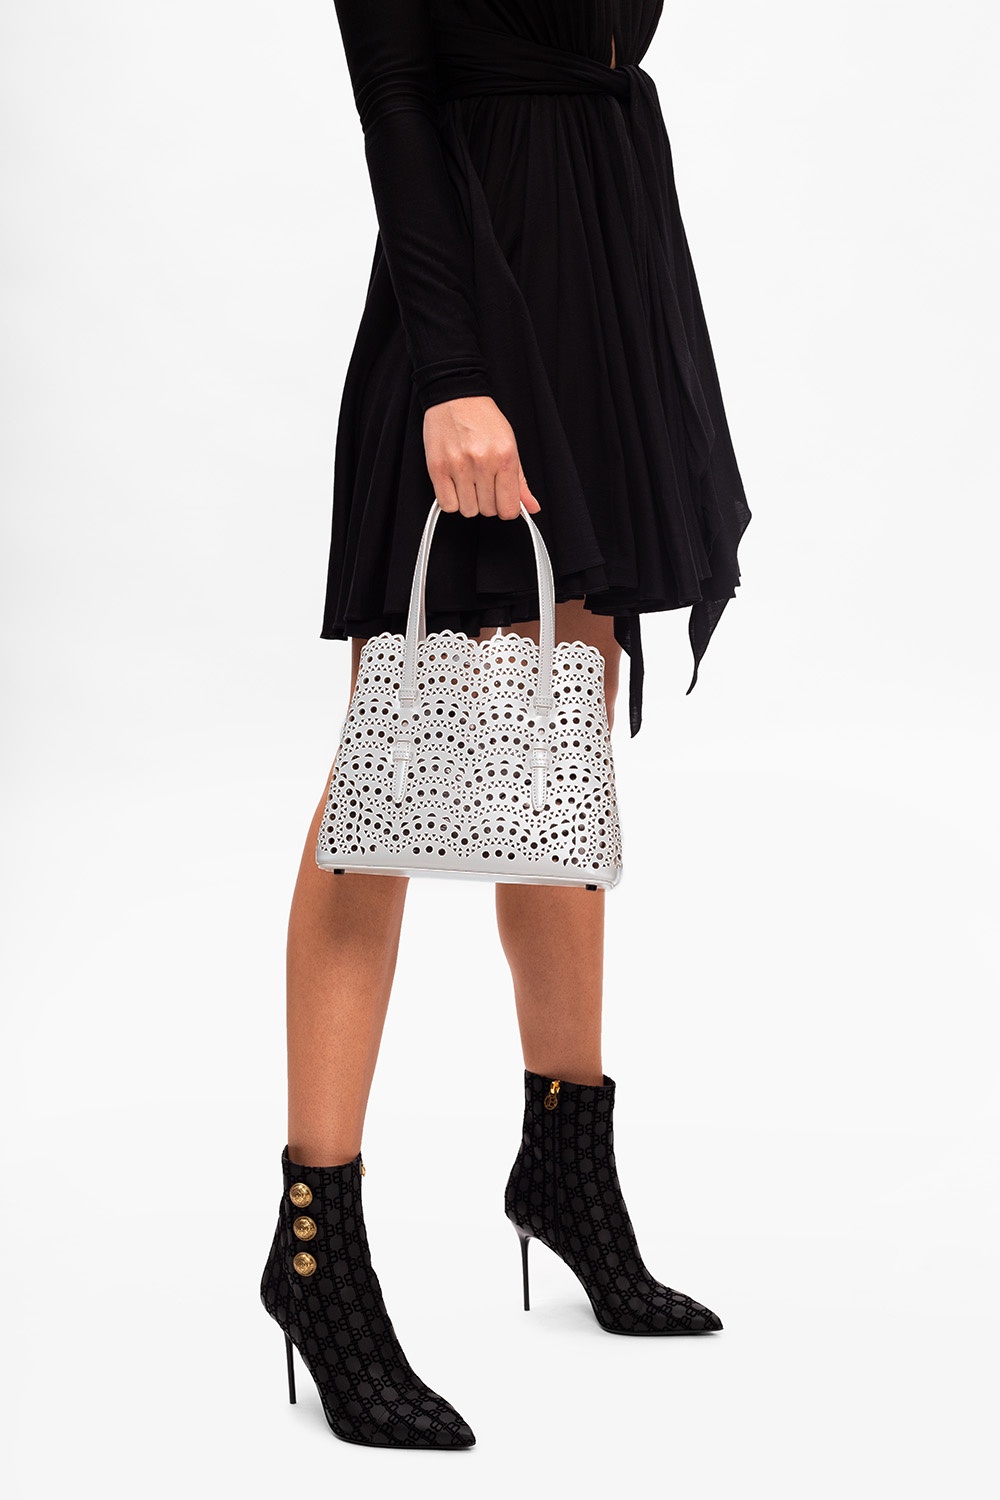 Alaia | Bags | Brand New Alaia Lili 22 Tote Handbag | Poshmark